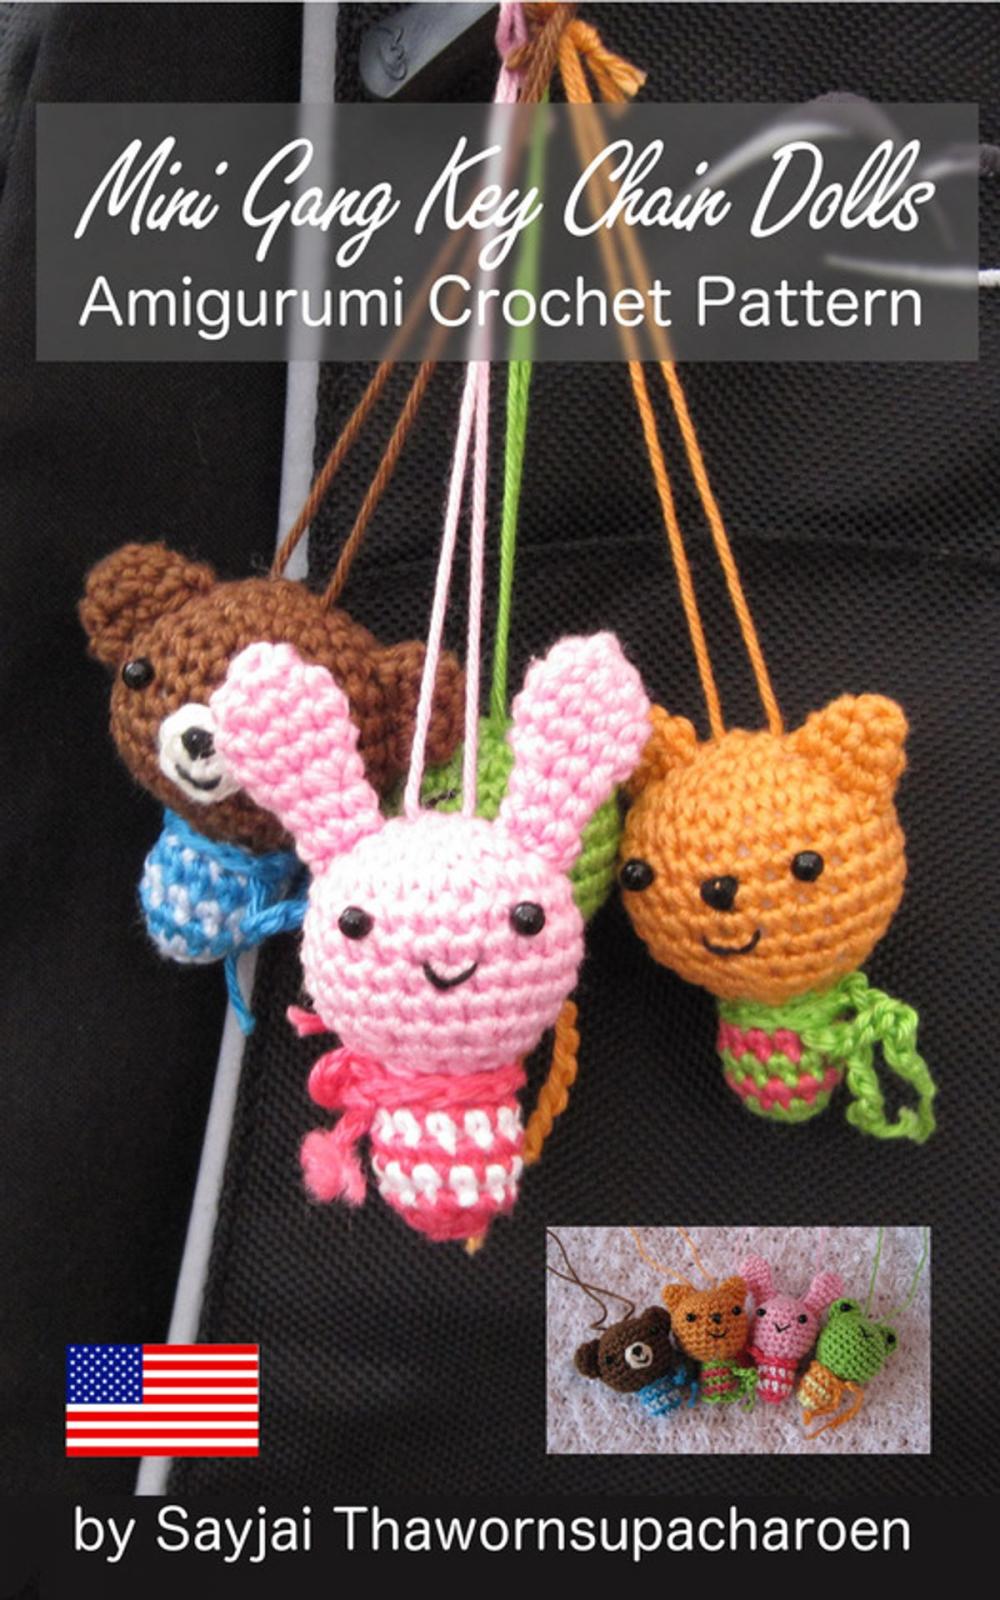 Big bigCover of Mini Gang Key Chain Dolls Amigurumi Crochet Pattern